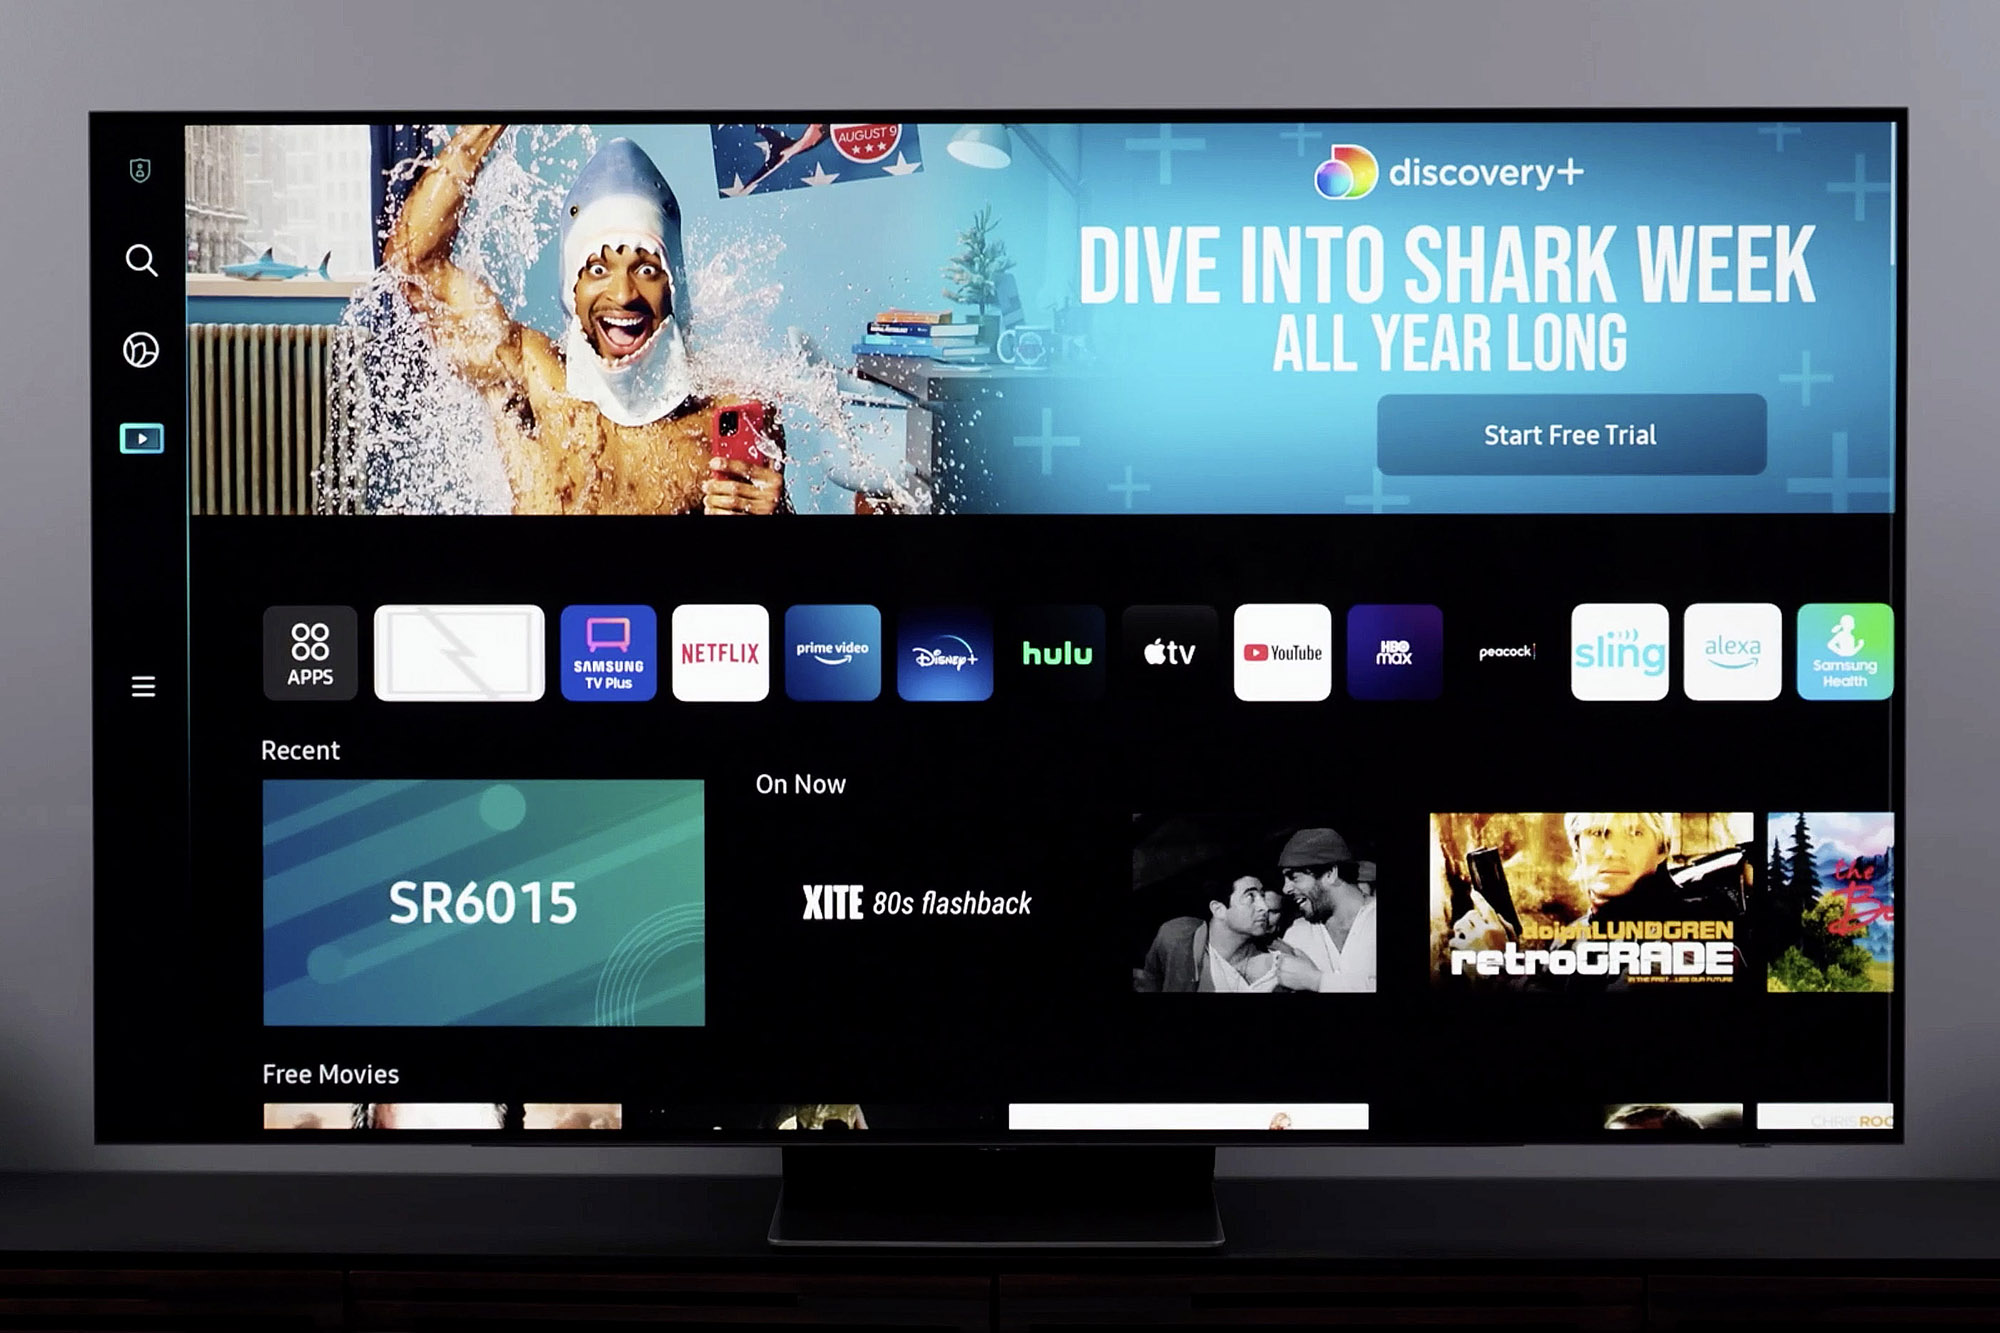 TV connectées : Android TV, Alexa, Google Assistant, Netflix